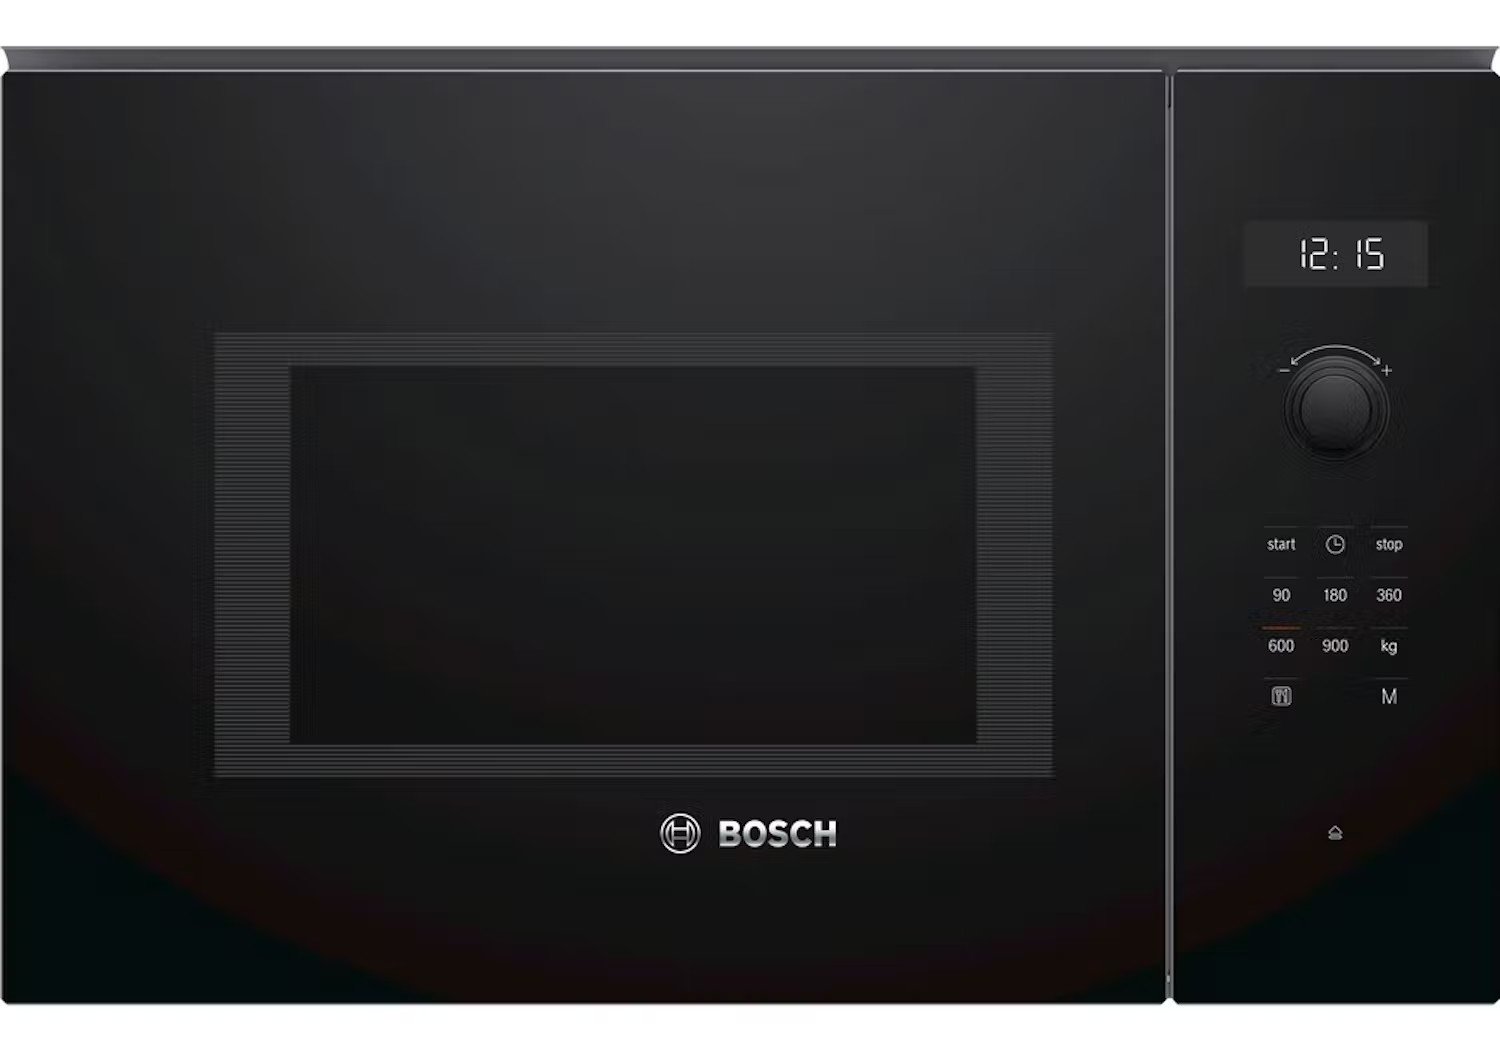 Köpa mikrovågsugn - Mikrovågsugn Bosch Serie 6 BFL554MB0